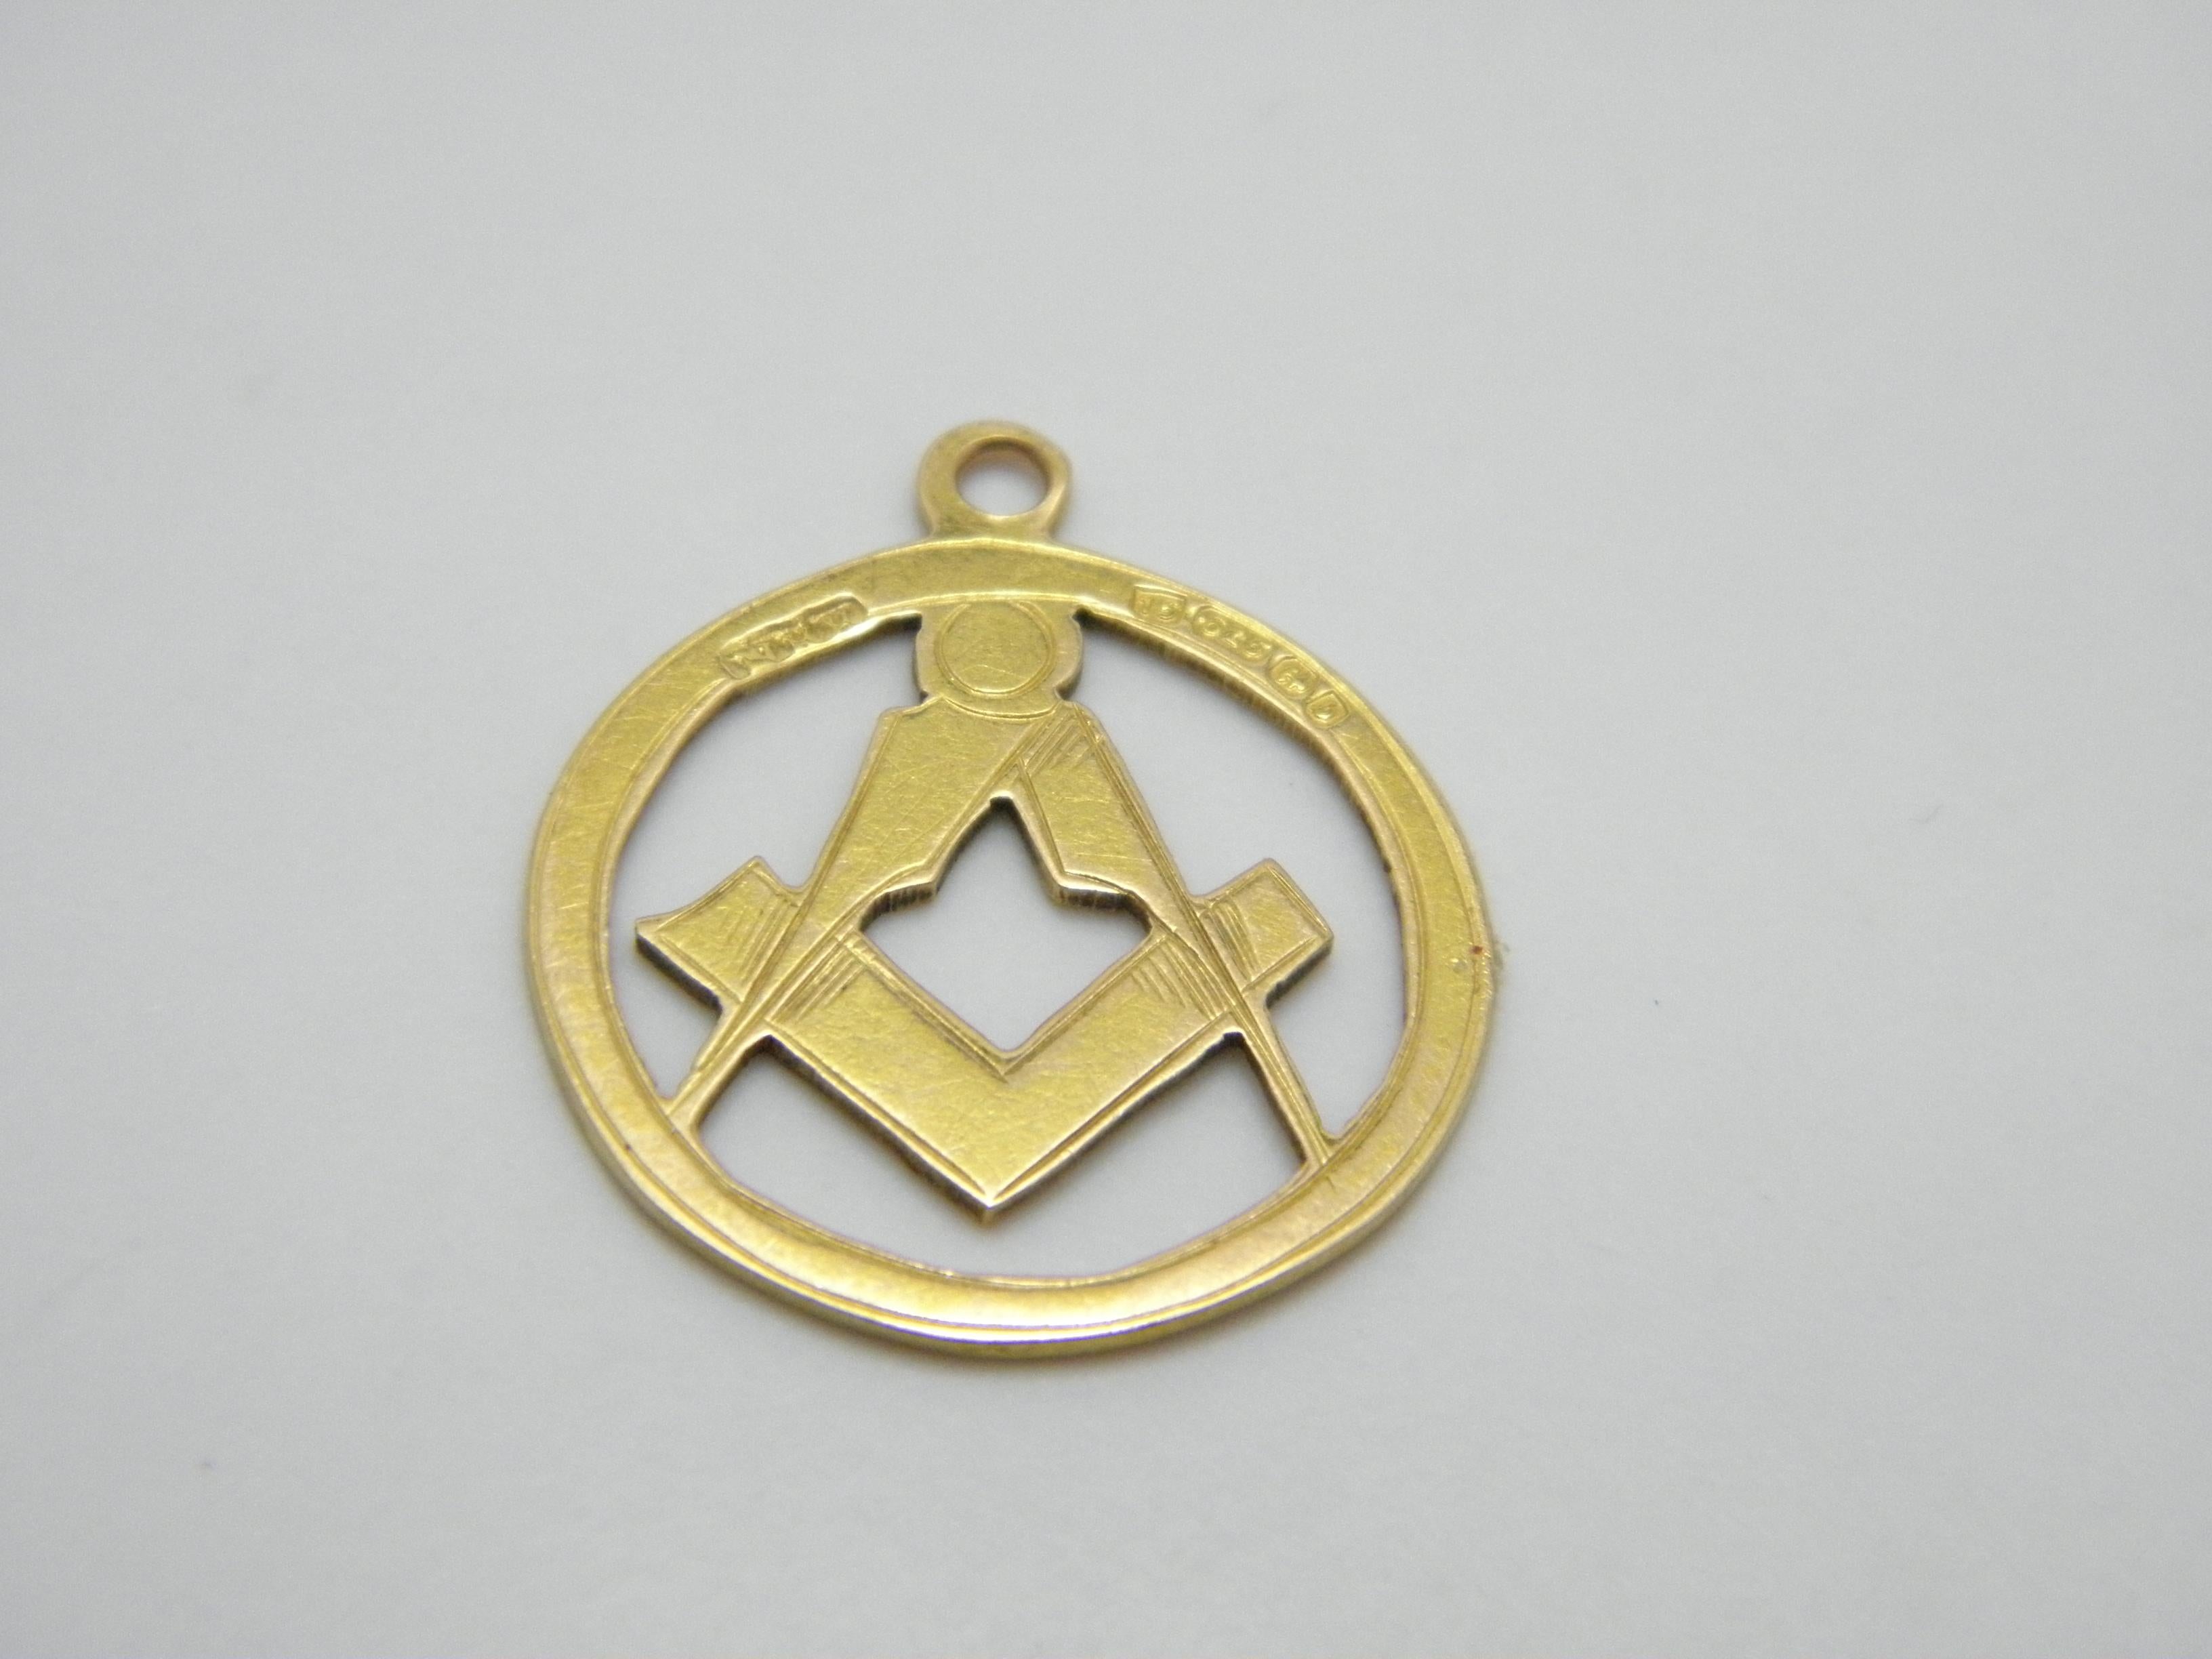 Antique 15ct Gold Masonic Compasses Pendant Fob c1876 Rose 625 Purity Freemason For Sale 1